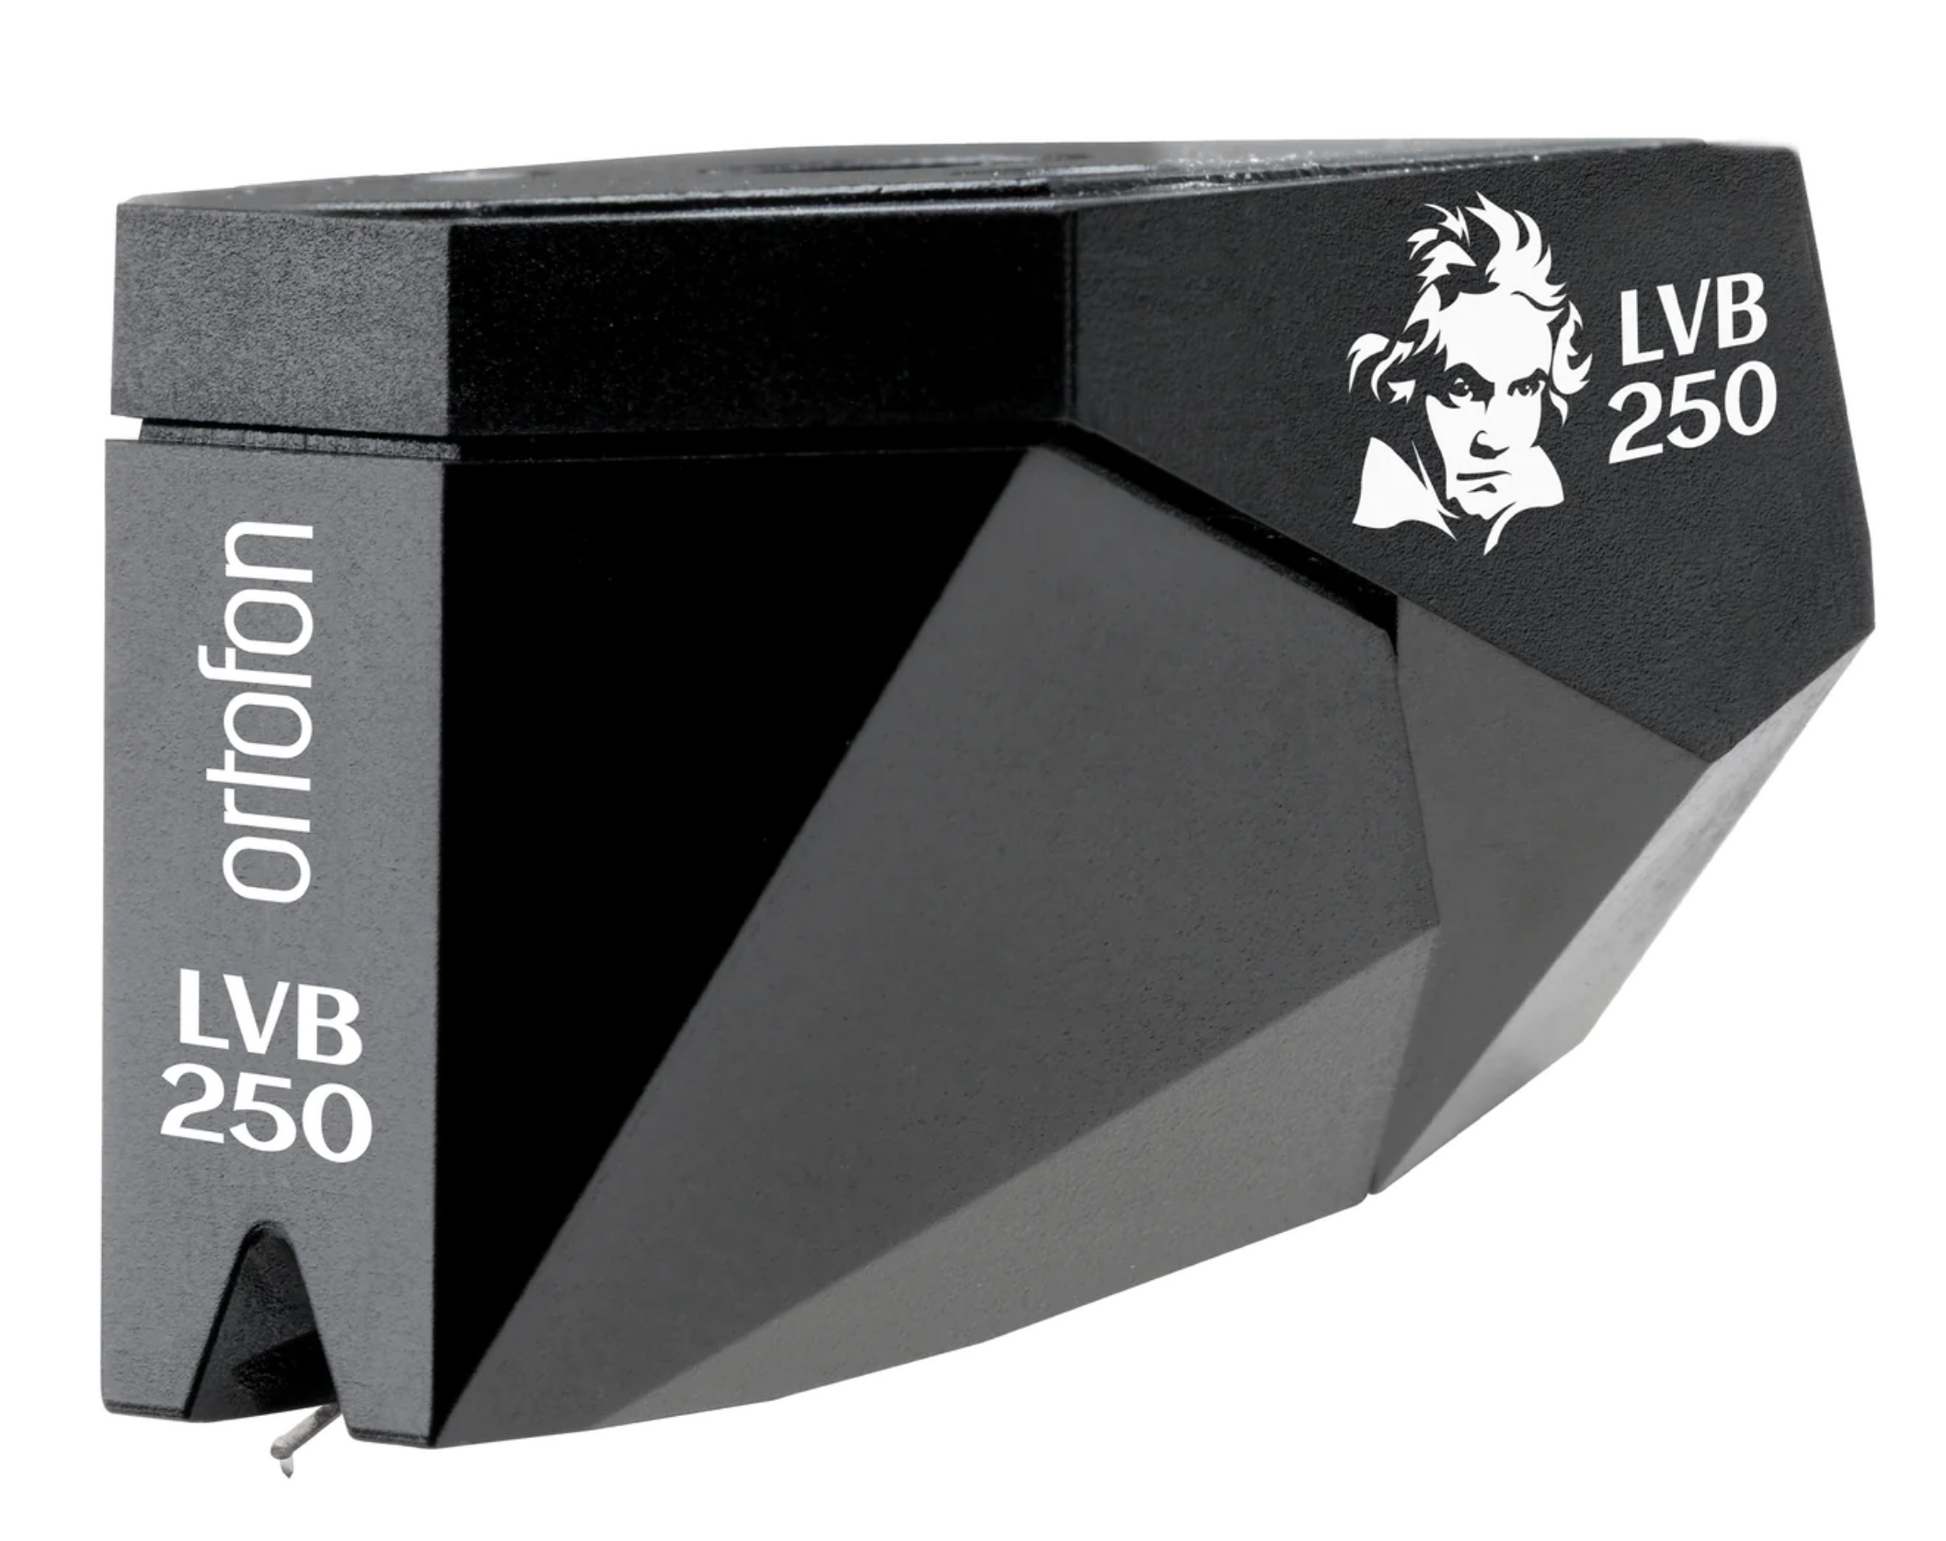 Ortofon 2M Black LVB 250 Pre-Mounted on SH-4 Headshell. Image of cartridge